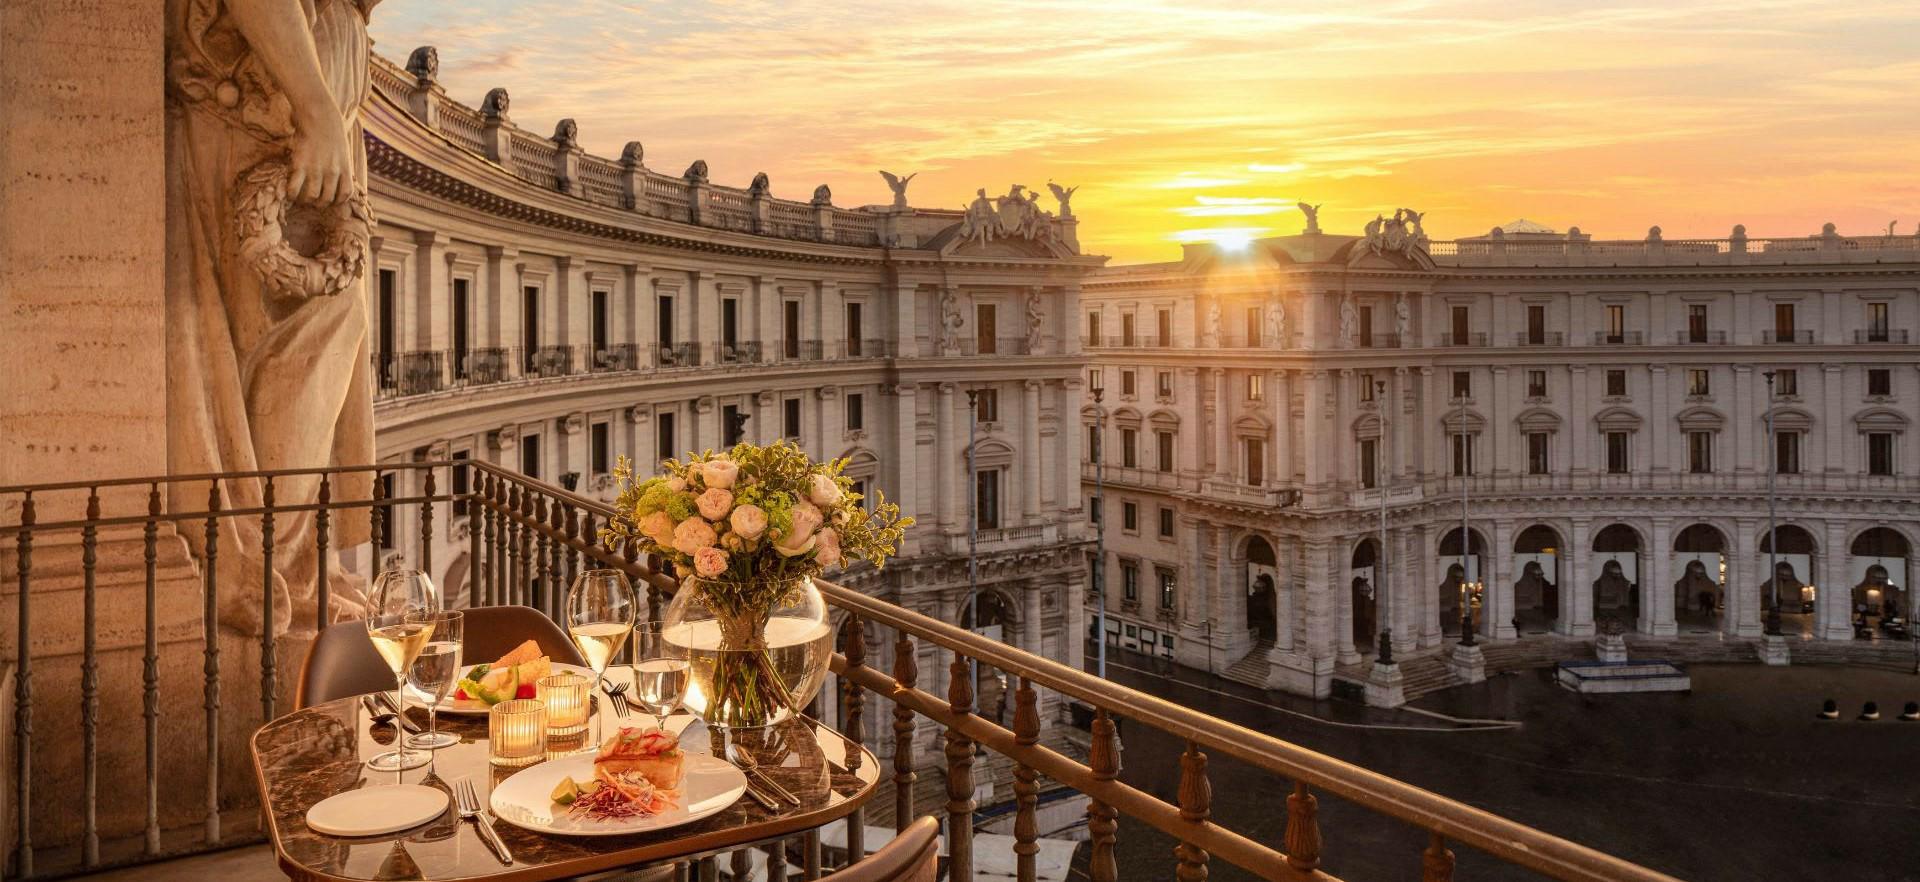 incentive-trip-in-rome-anantara-palazzo-hotel